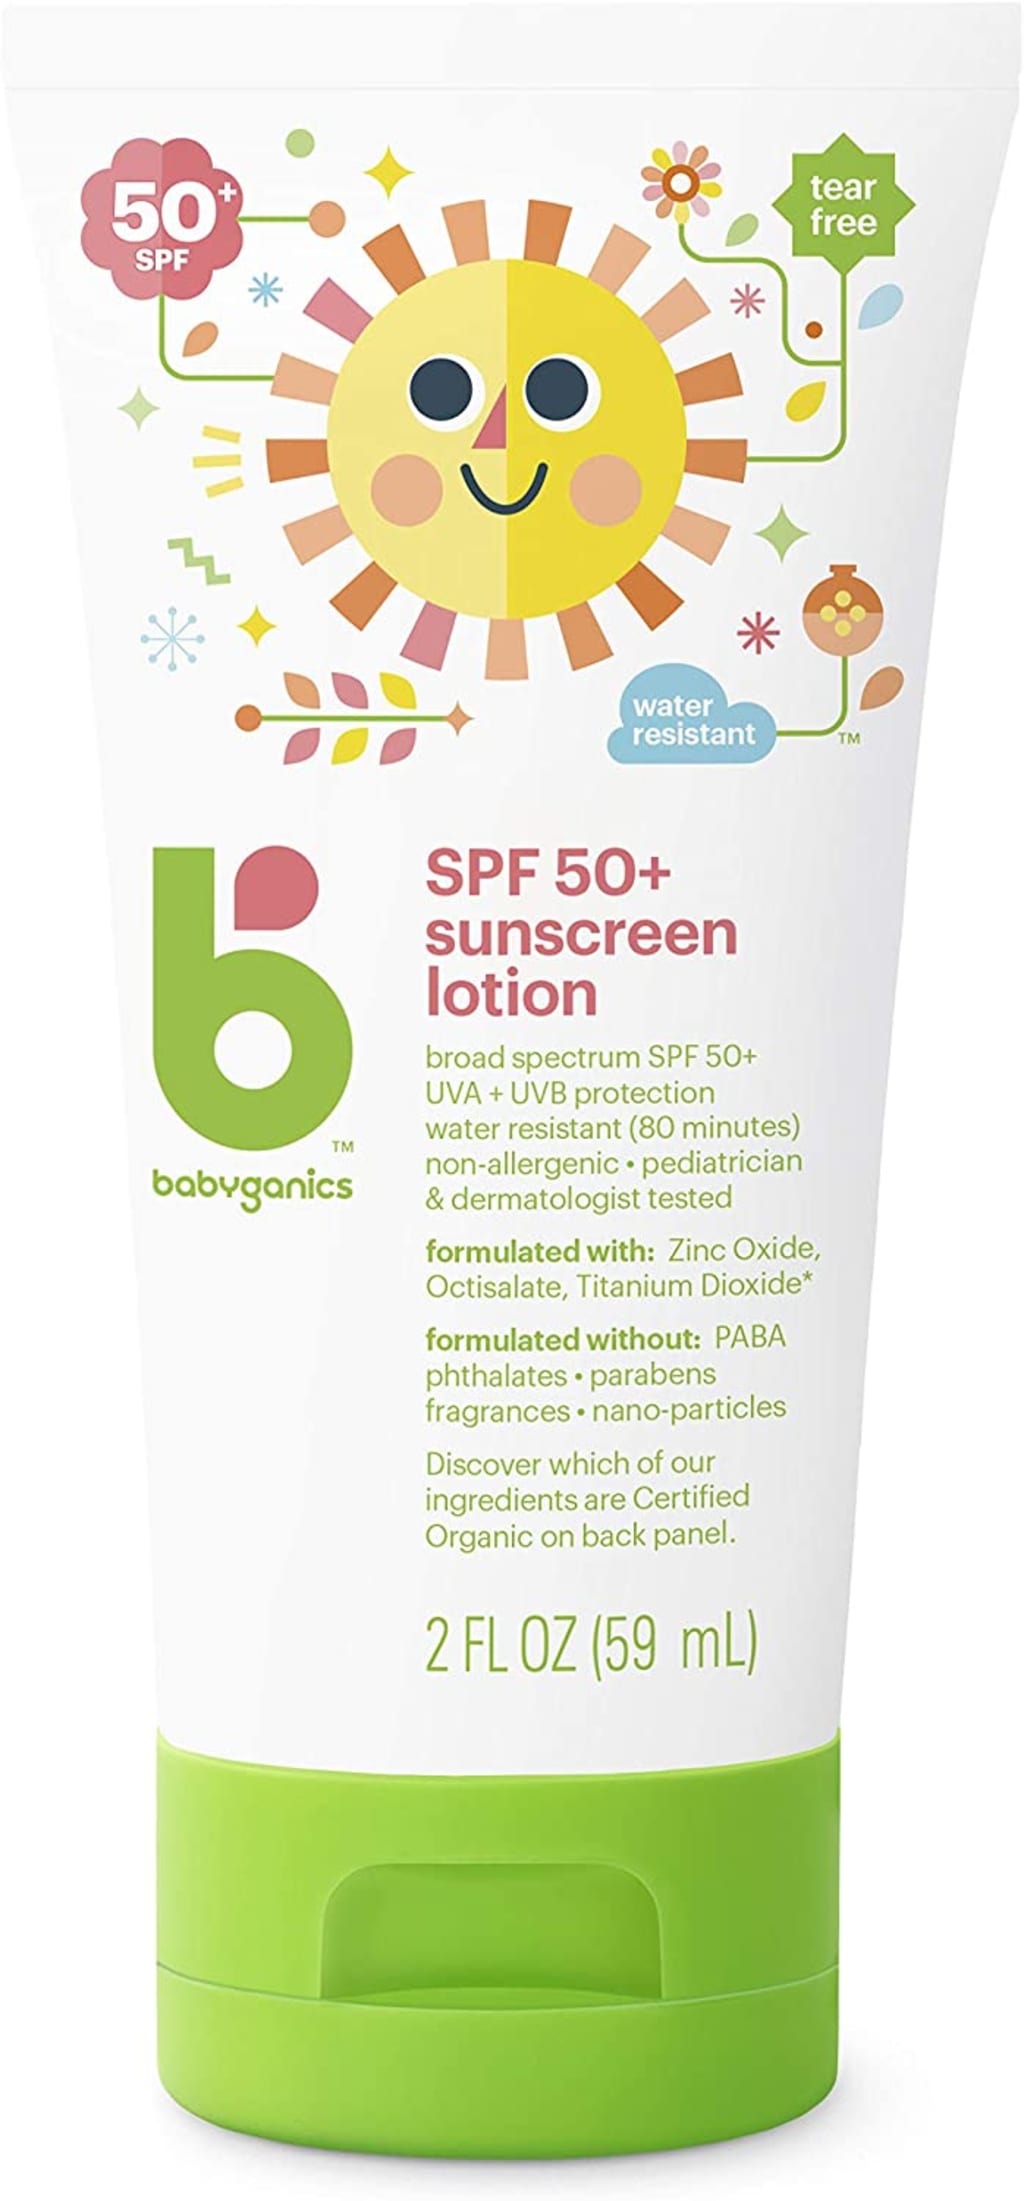 thinkbaby sunscreen price